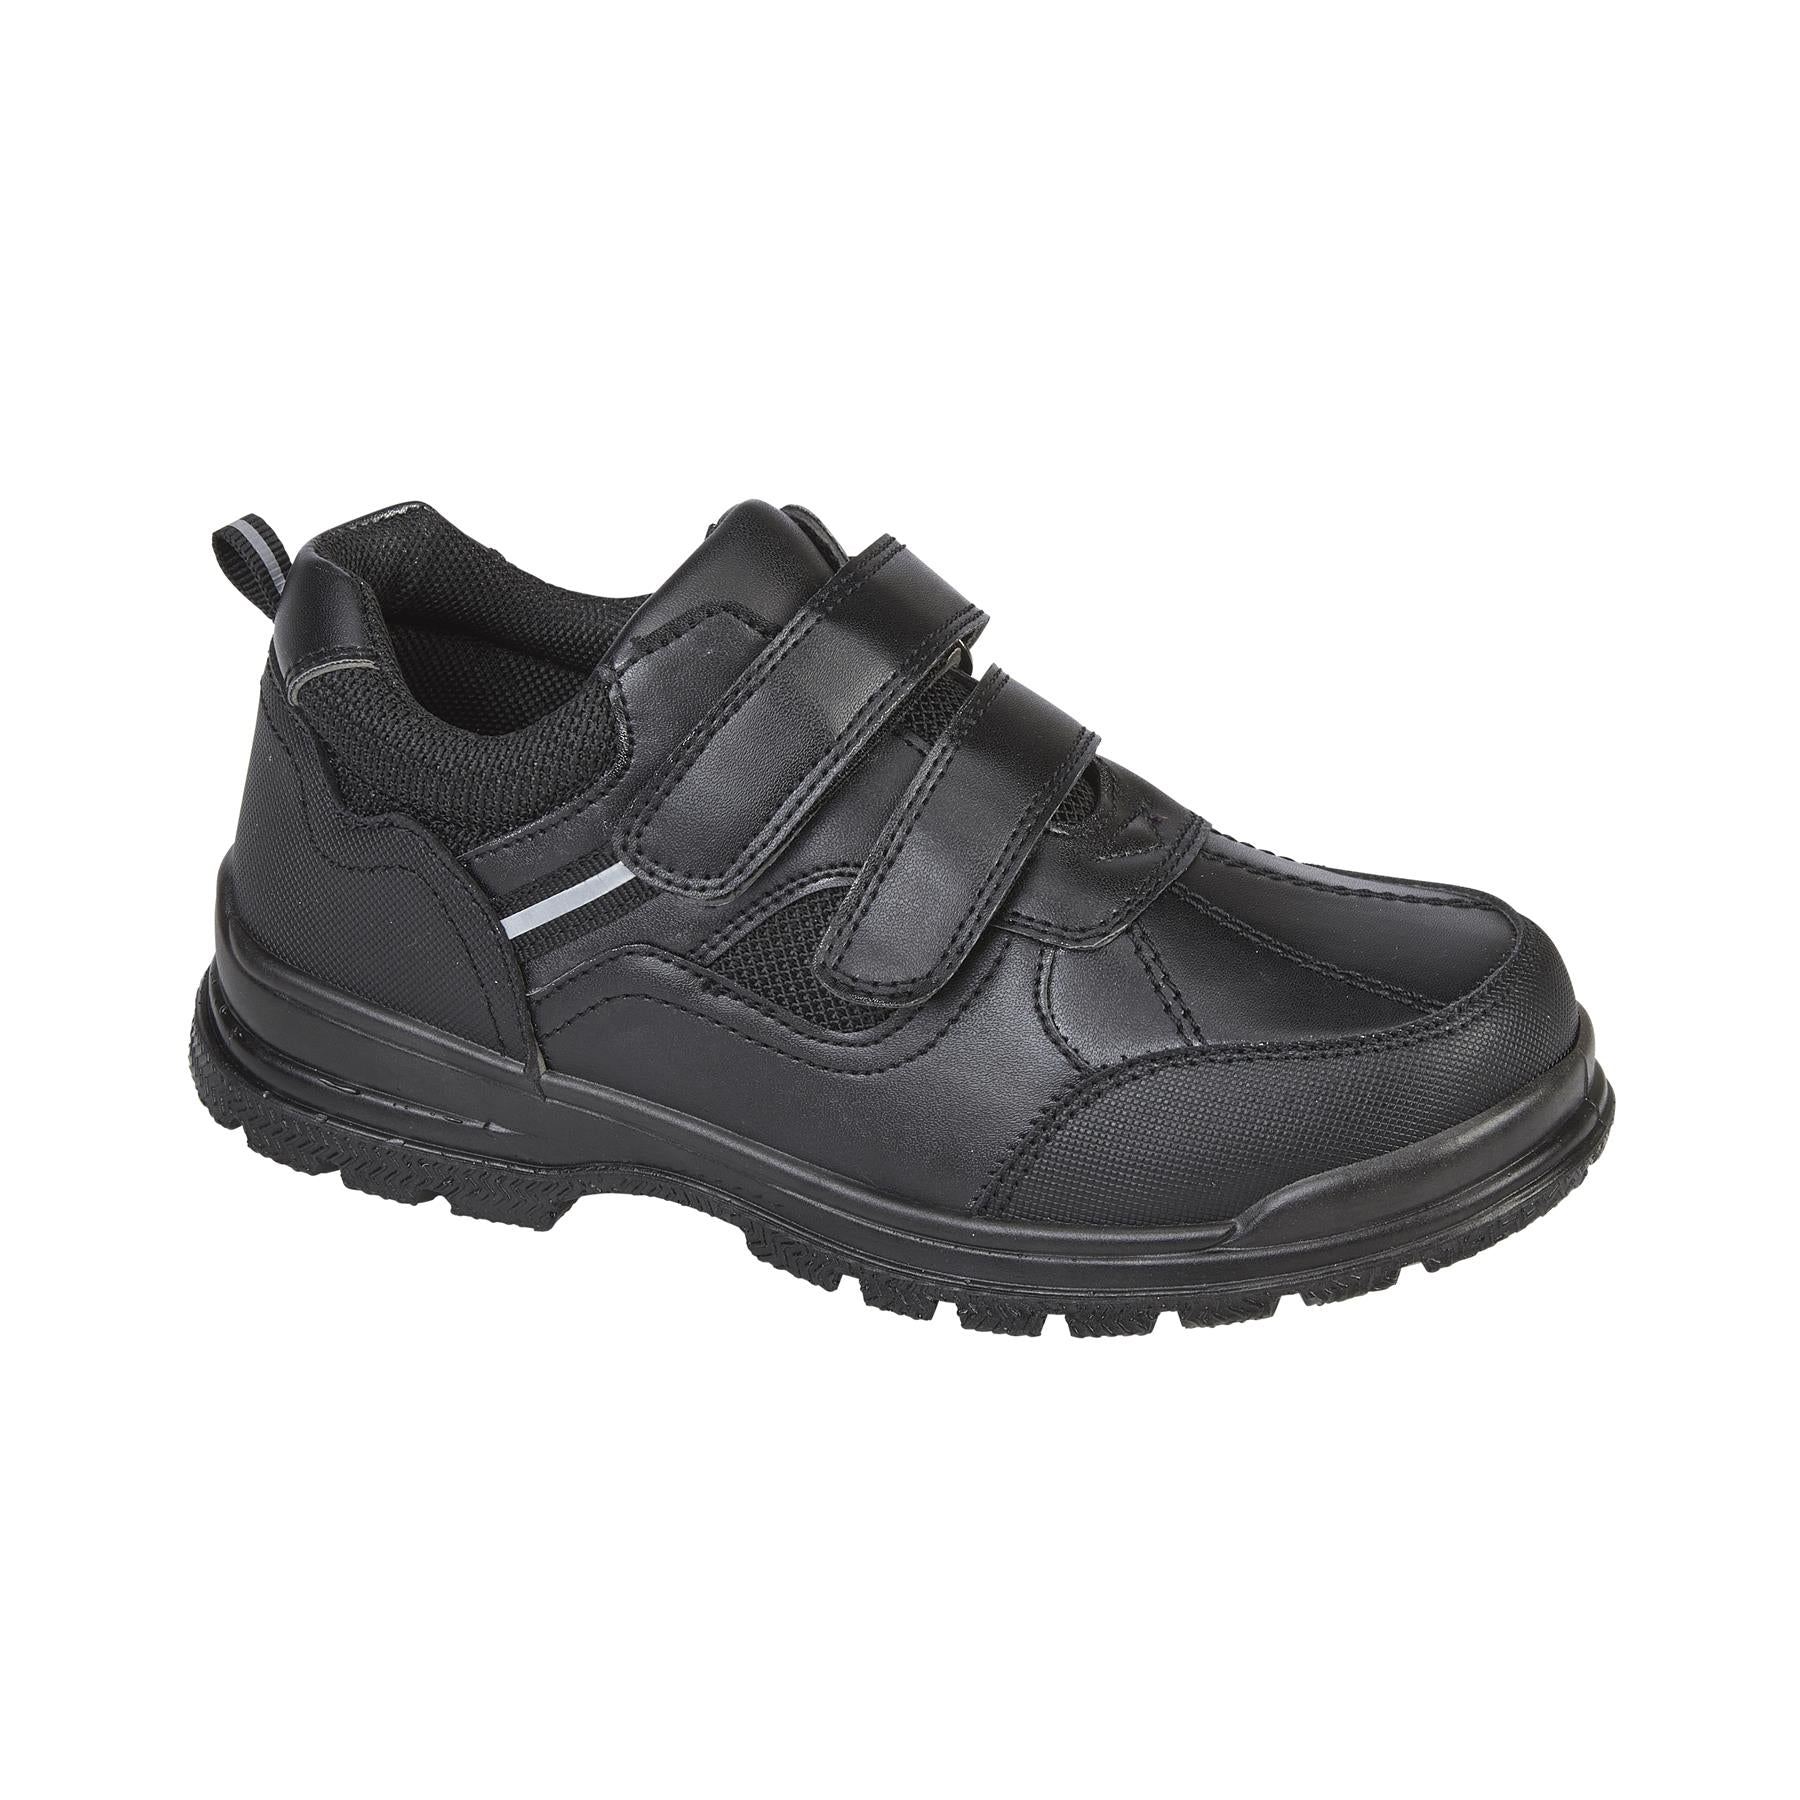 Boys School Shoes Wide Fit Walking Sneaker Kids Touch Fasten Athletic Trainers